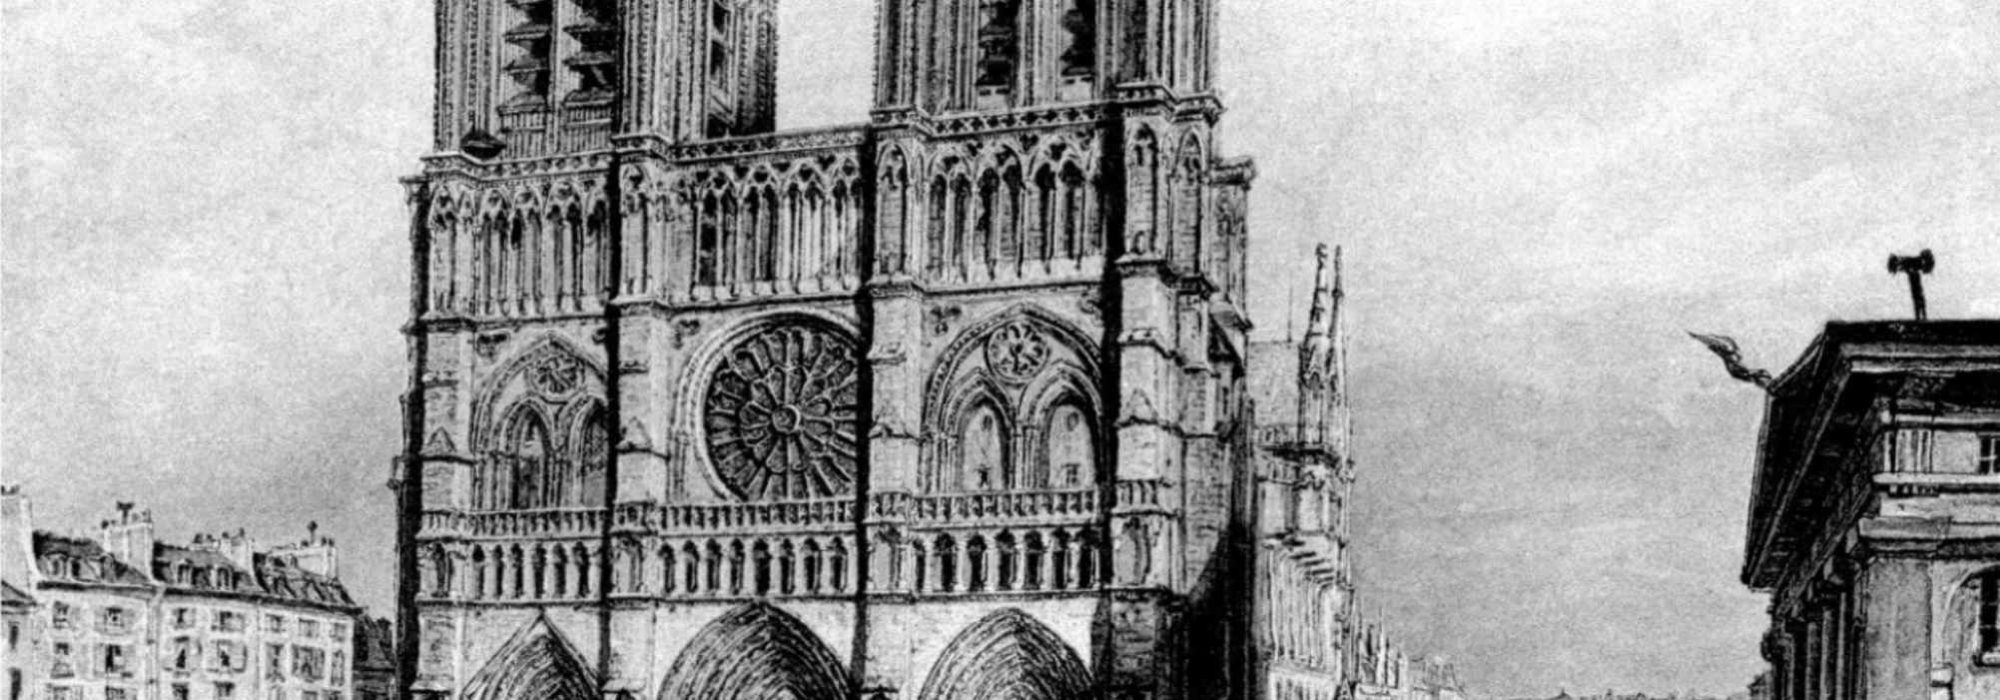 Imagem: Notre-Dame de Paris (gravura de 1840)